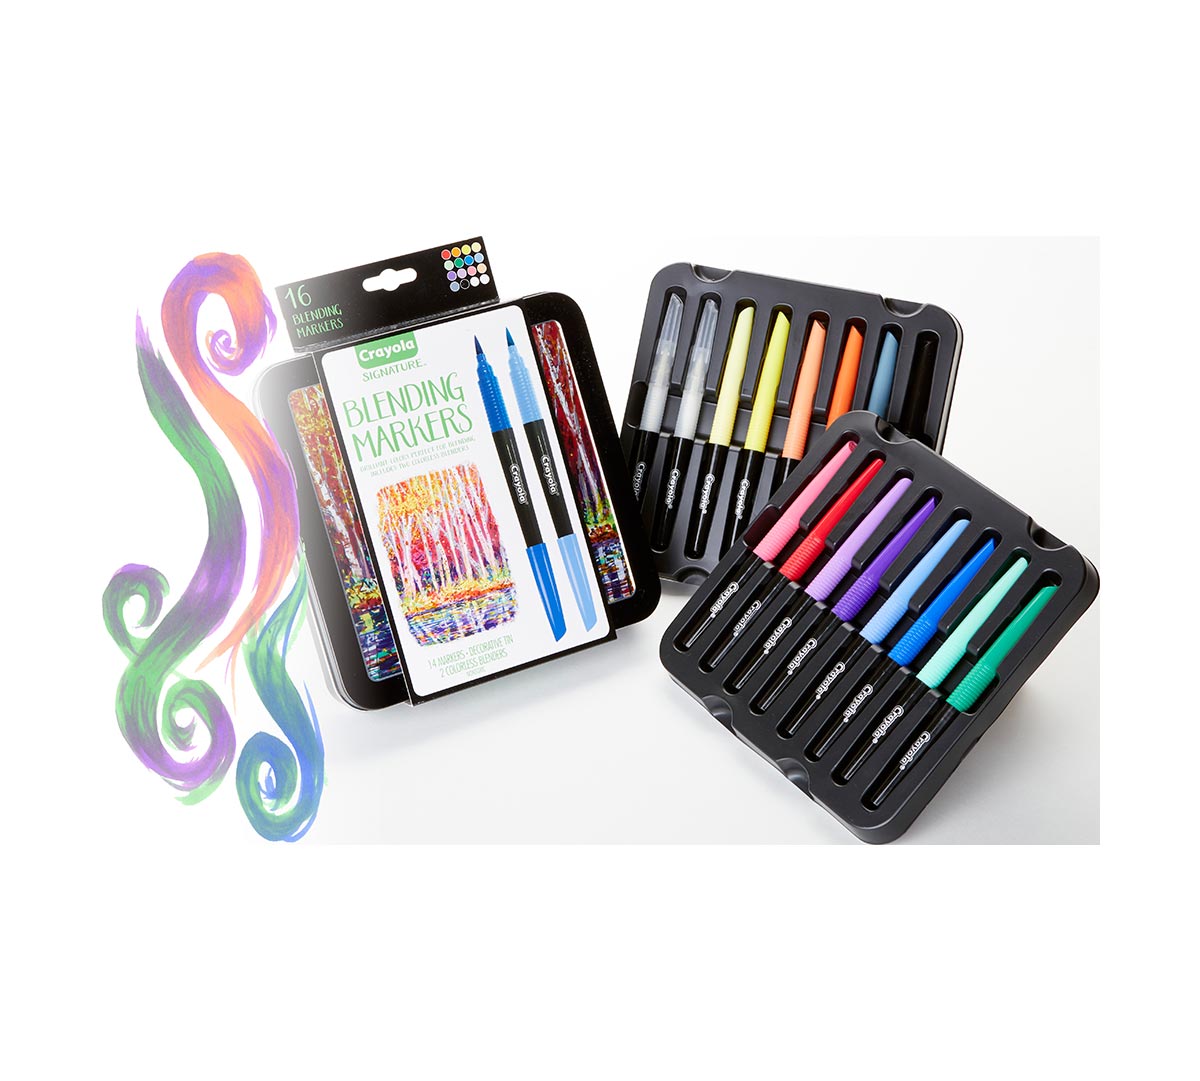 Crayola Signature Blending Marker Set, 16 | Crayola.com | Crayola